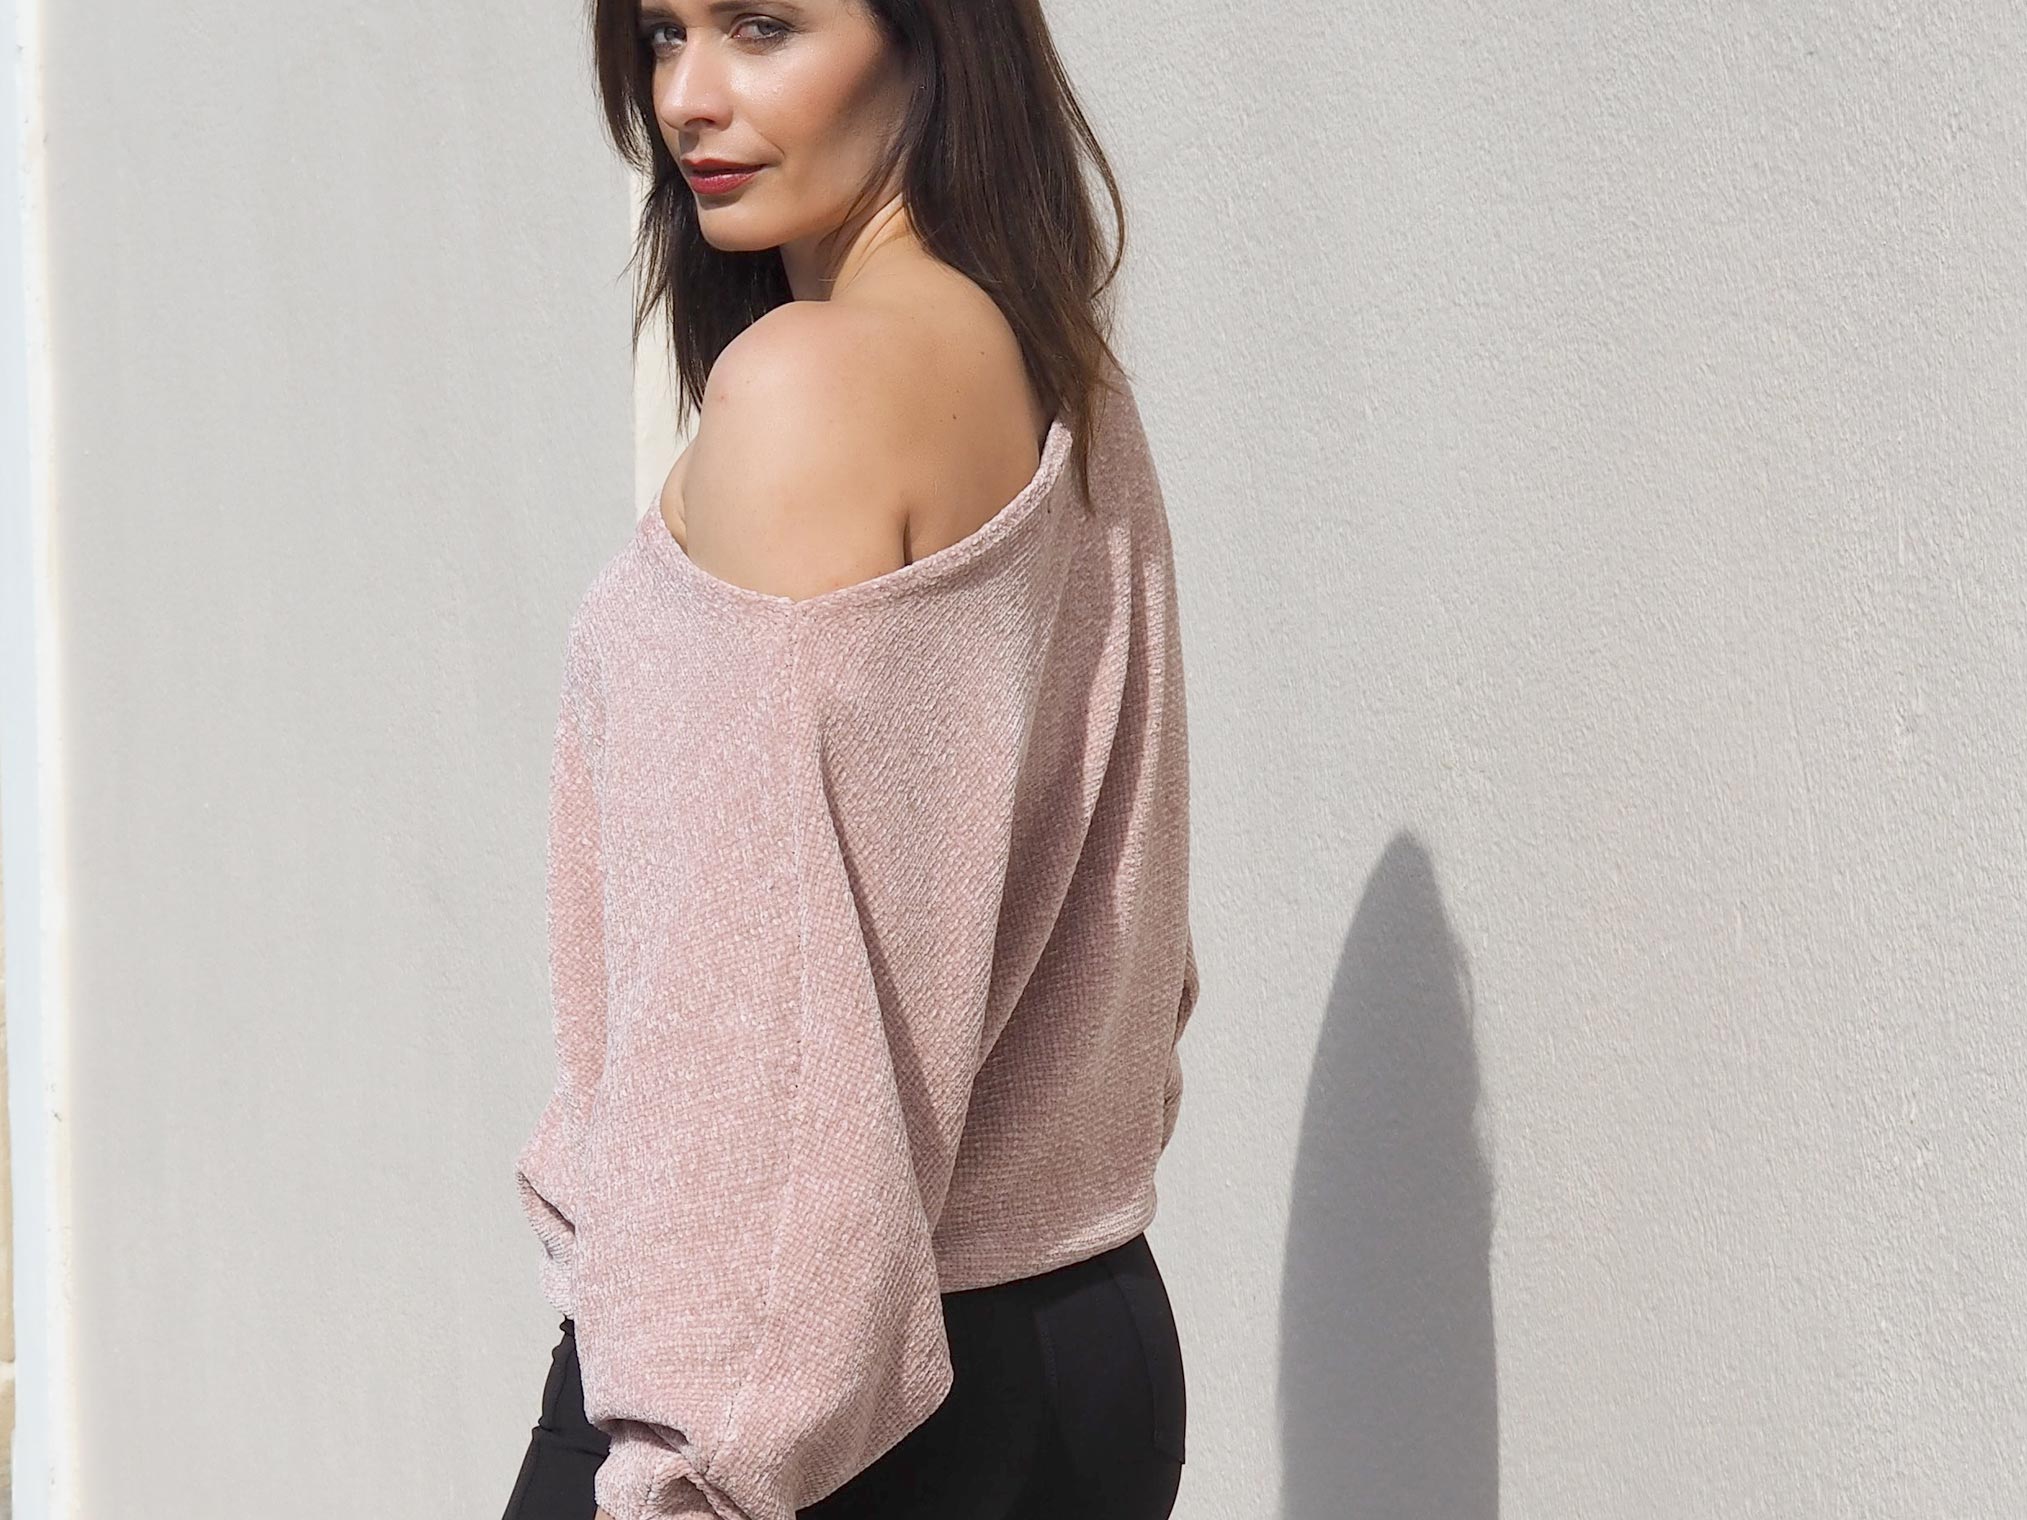 Zara pink sweater off the shoulder autumn trend